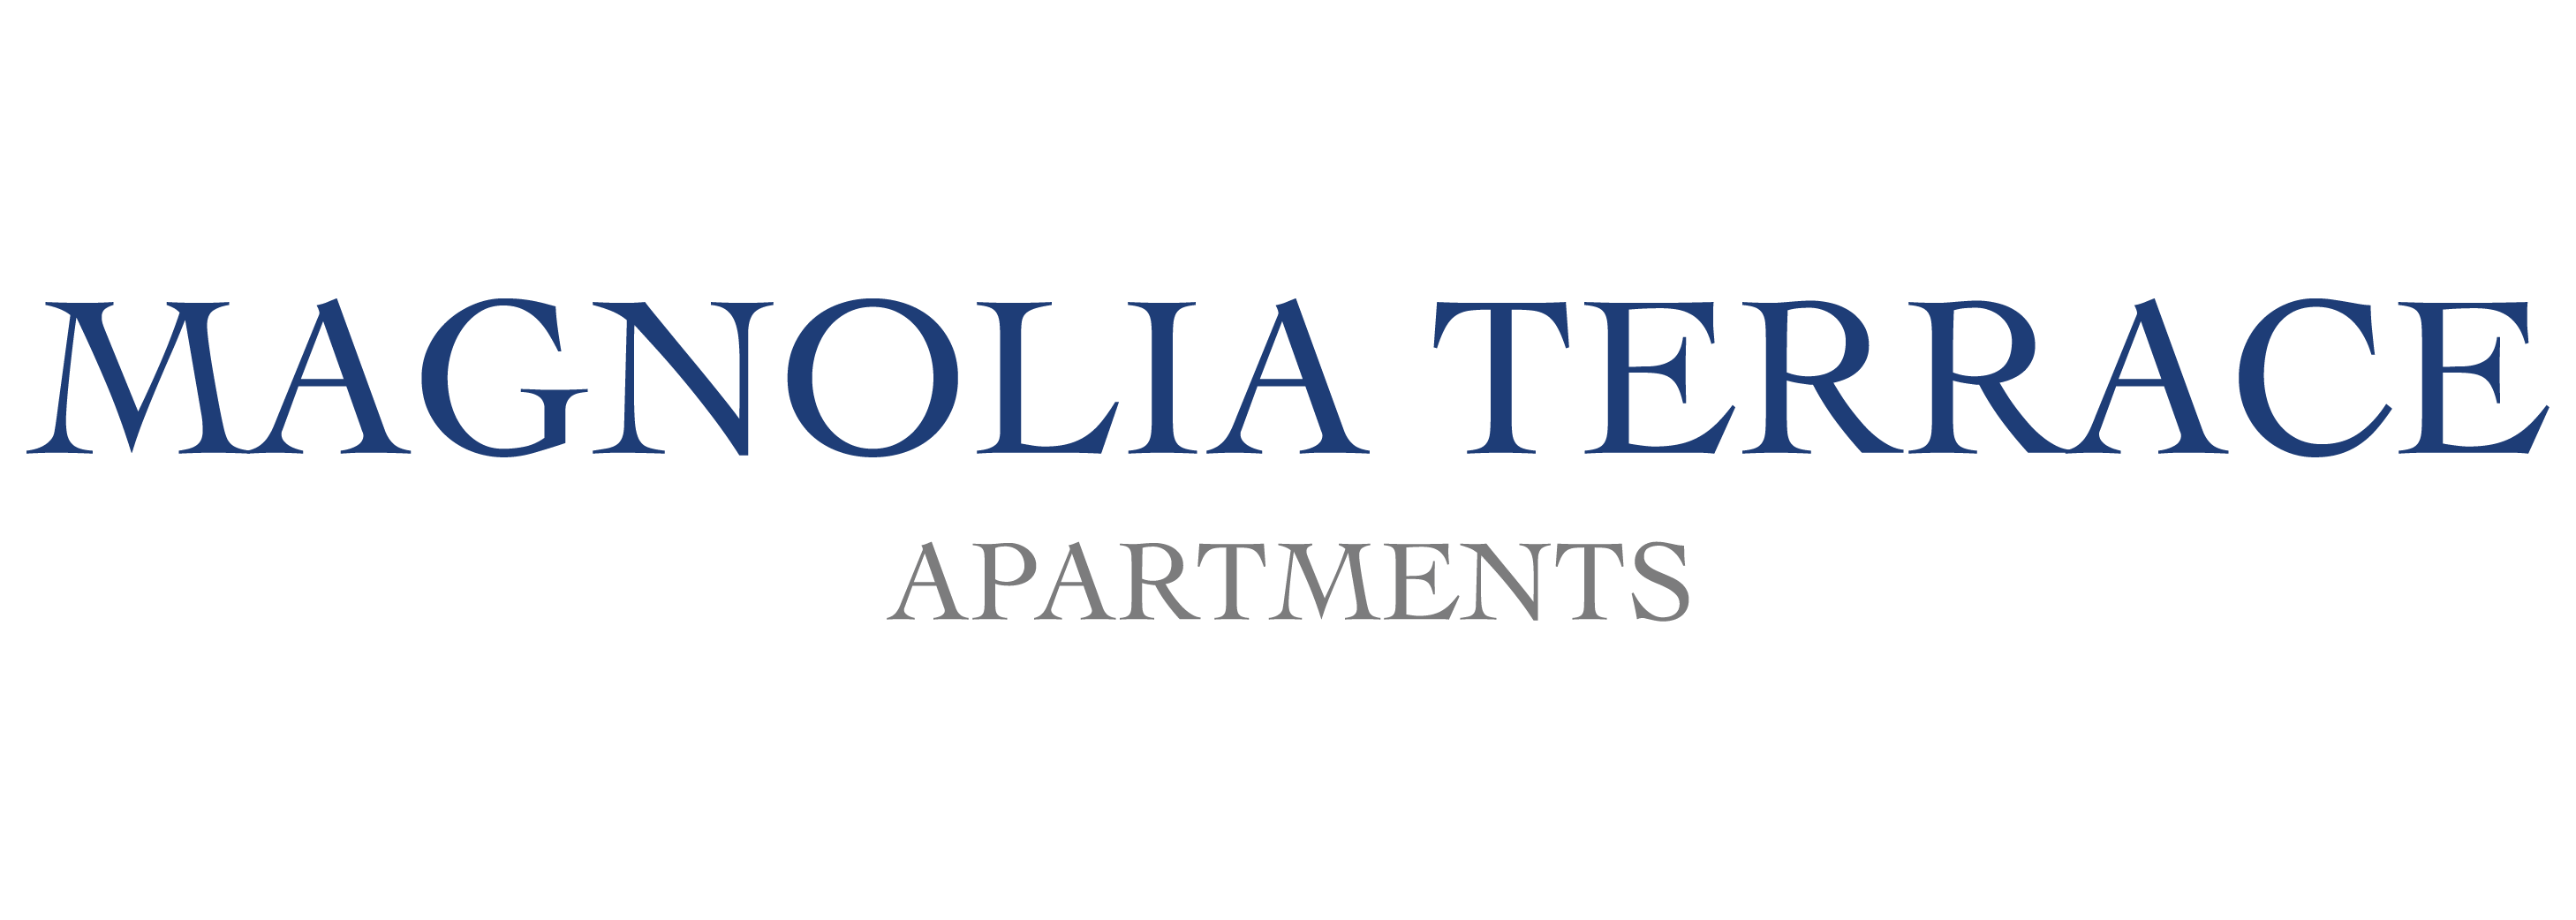 Magnolia Terrace Apartments Promotional Logo